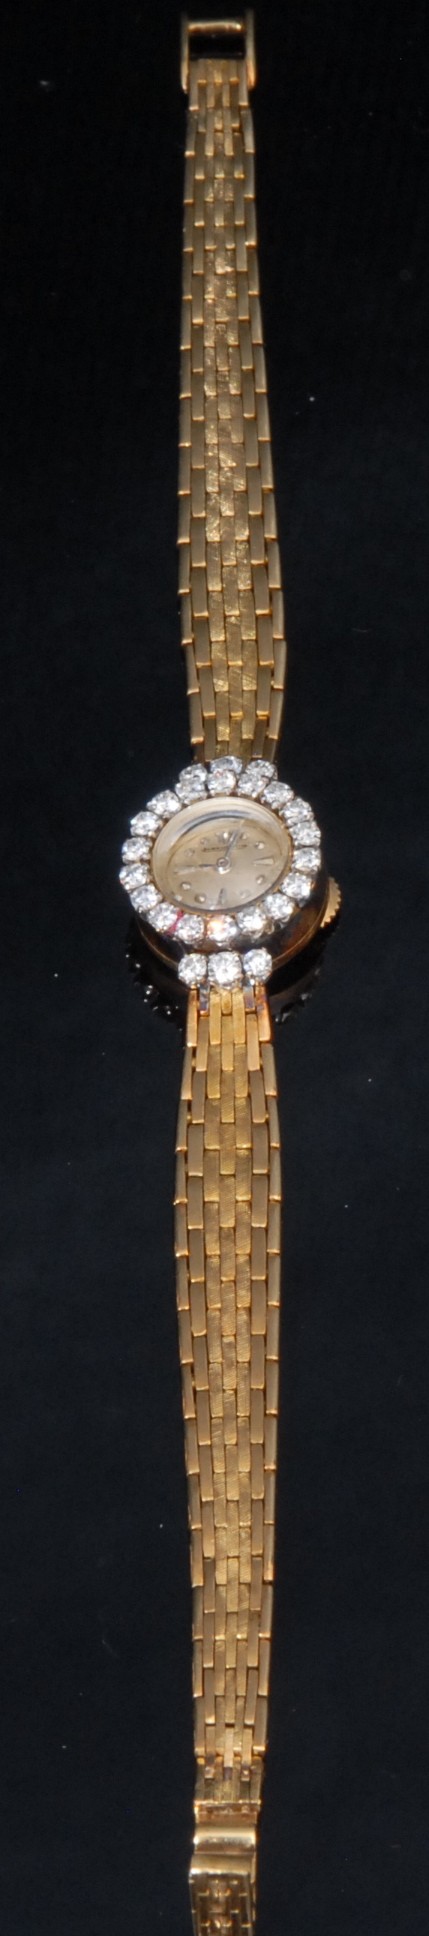 A ladies diamond set 18ct gold Jaeger-LeCoultre cocktail watch, champagne dial, baton hour